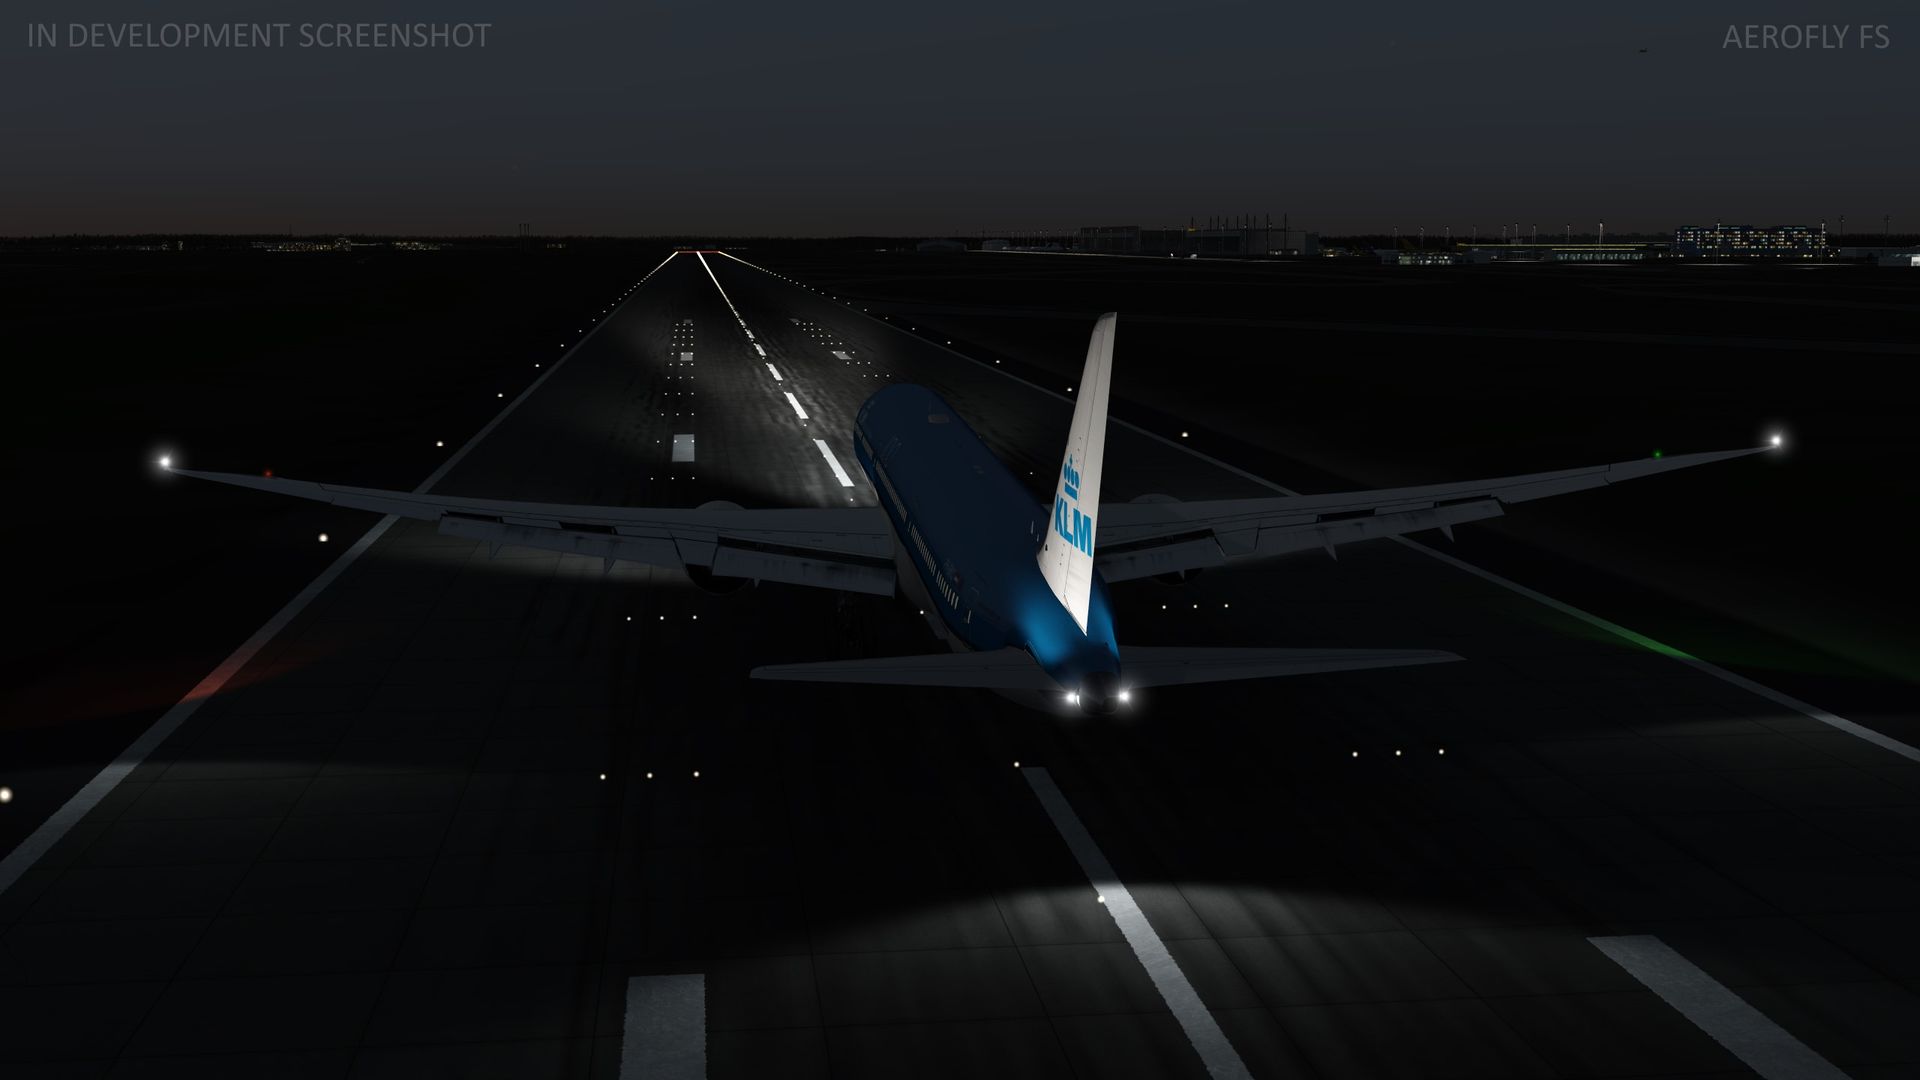 aerofly_fs_b787-10_external_night_landing_lights_eddm